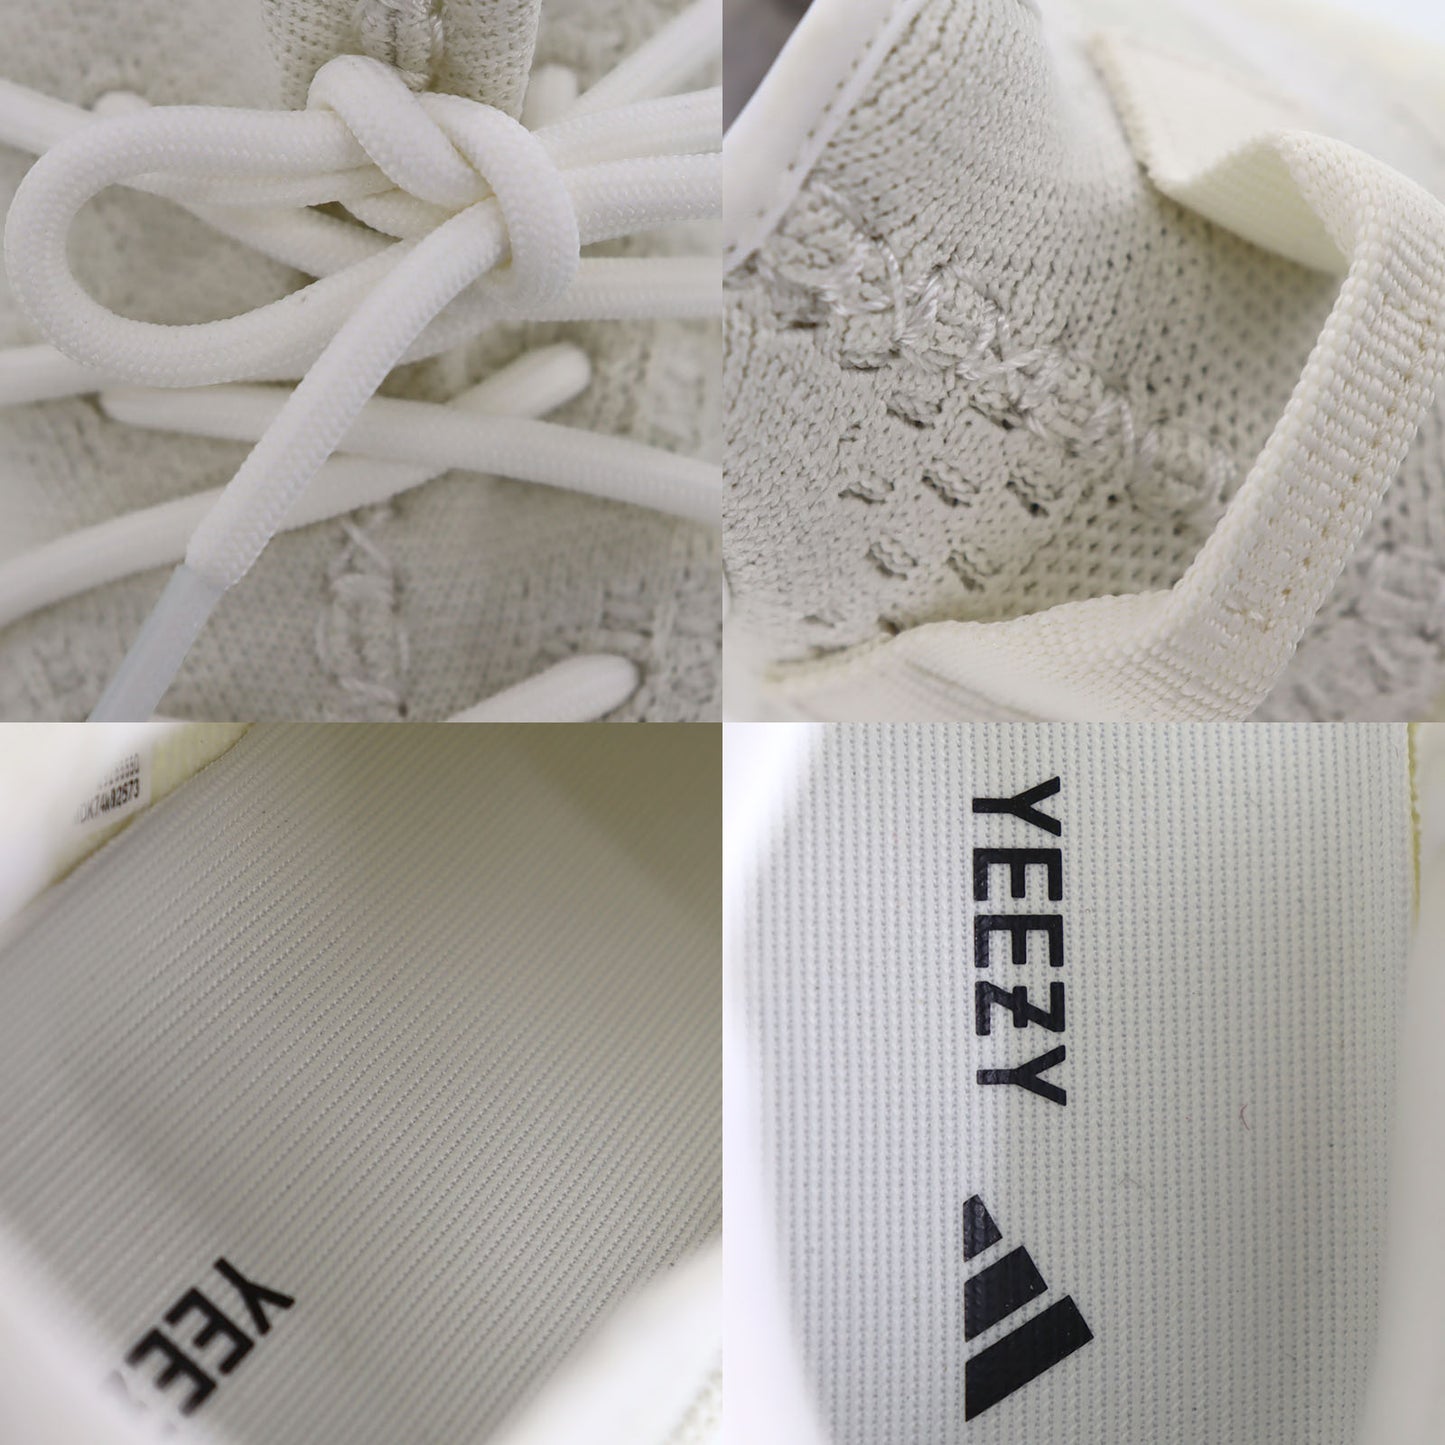 Adidas Yeezy Boost 350 V2 Cream White/Triple White 9 1/2 #BQ112